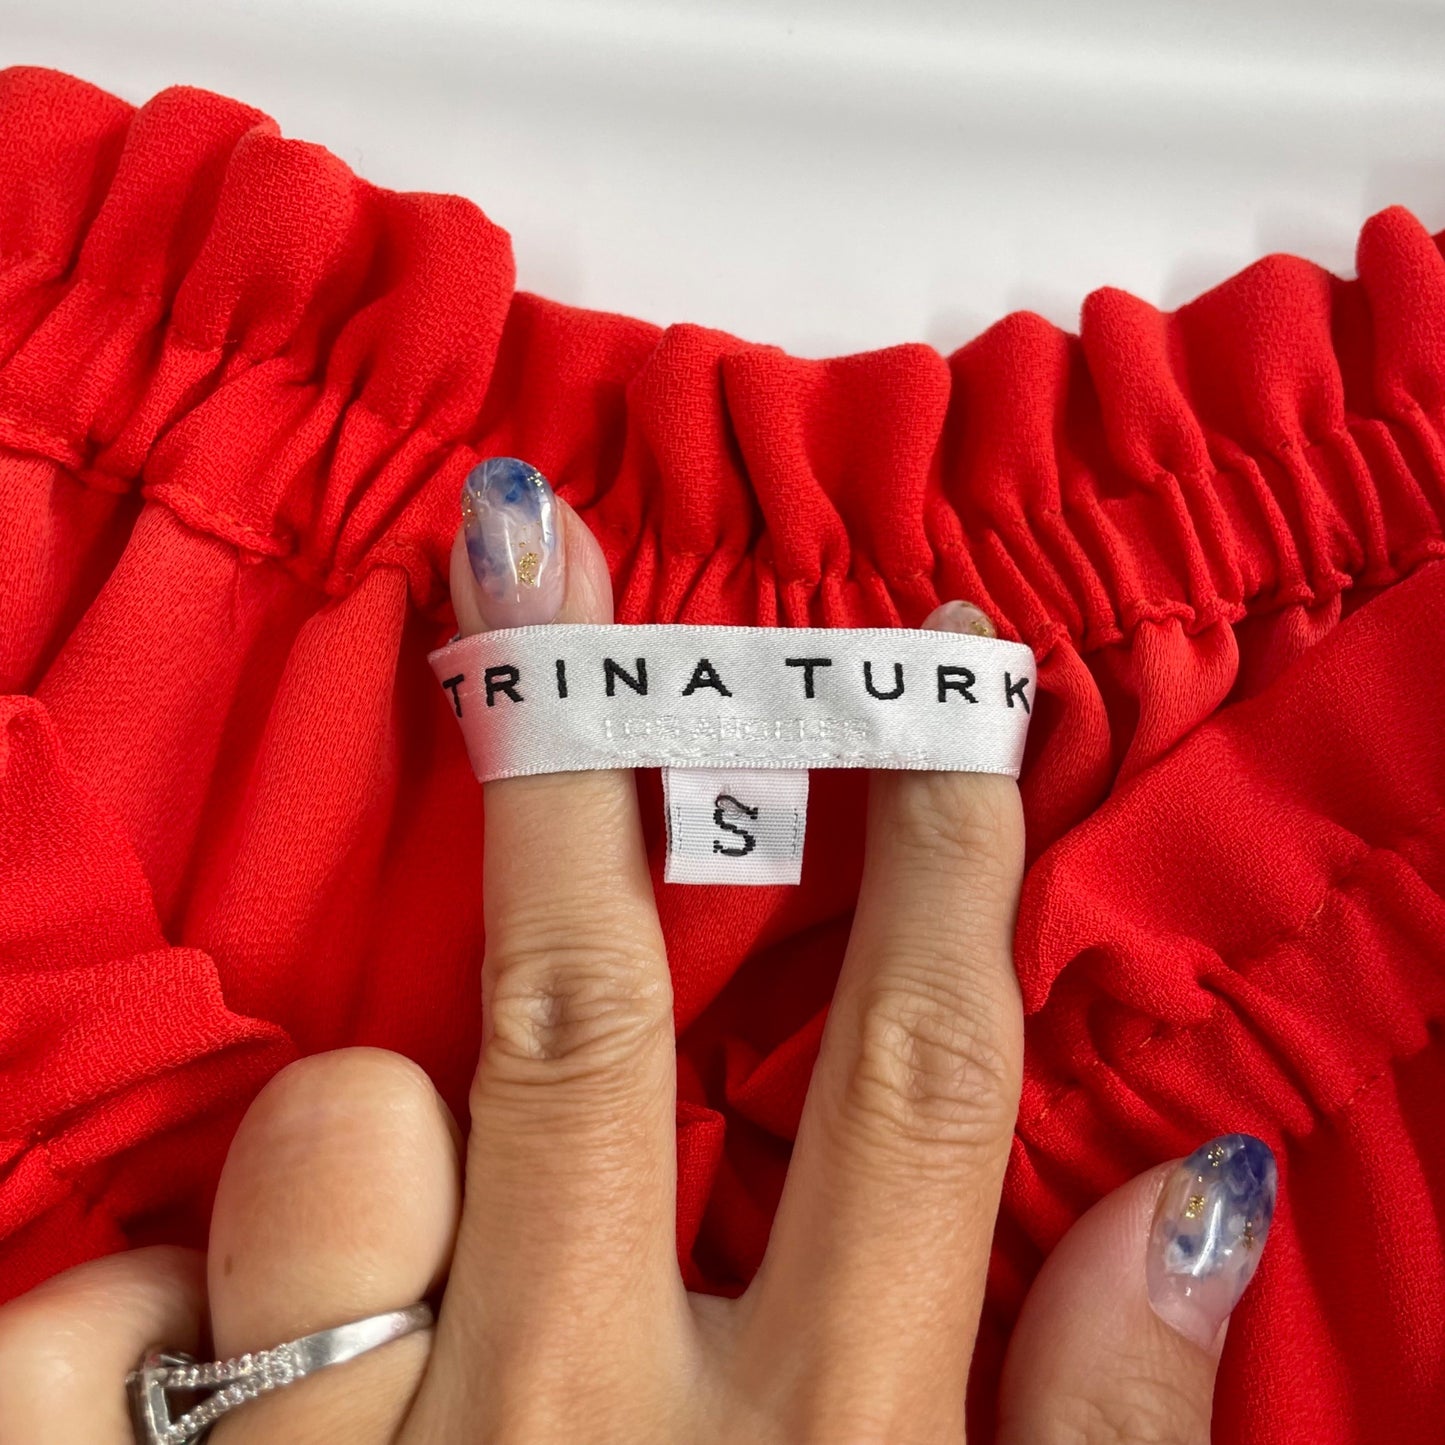 Trina Turk Promenade Off the Shoulder Top in Cherry Tomato Womens Size Small